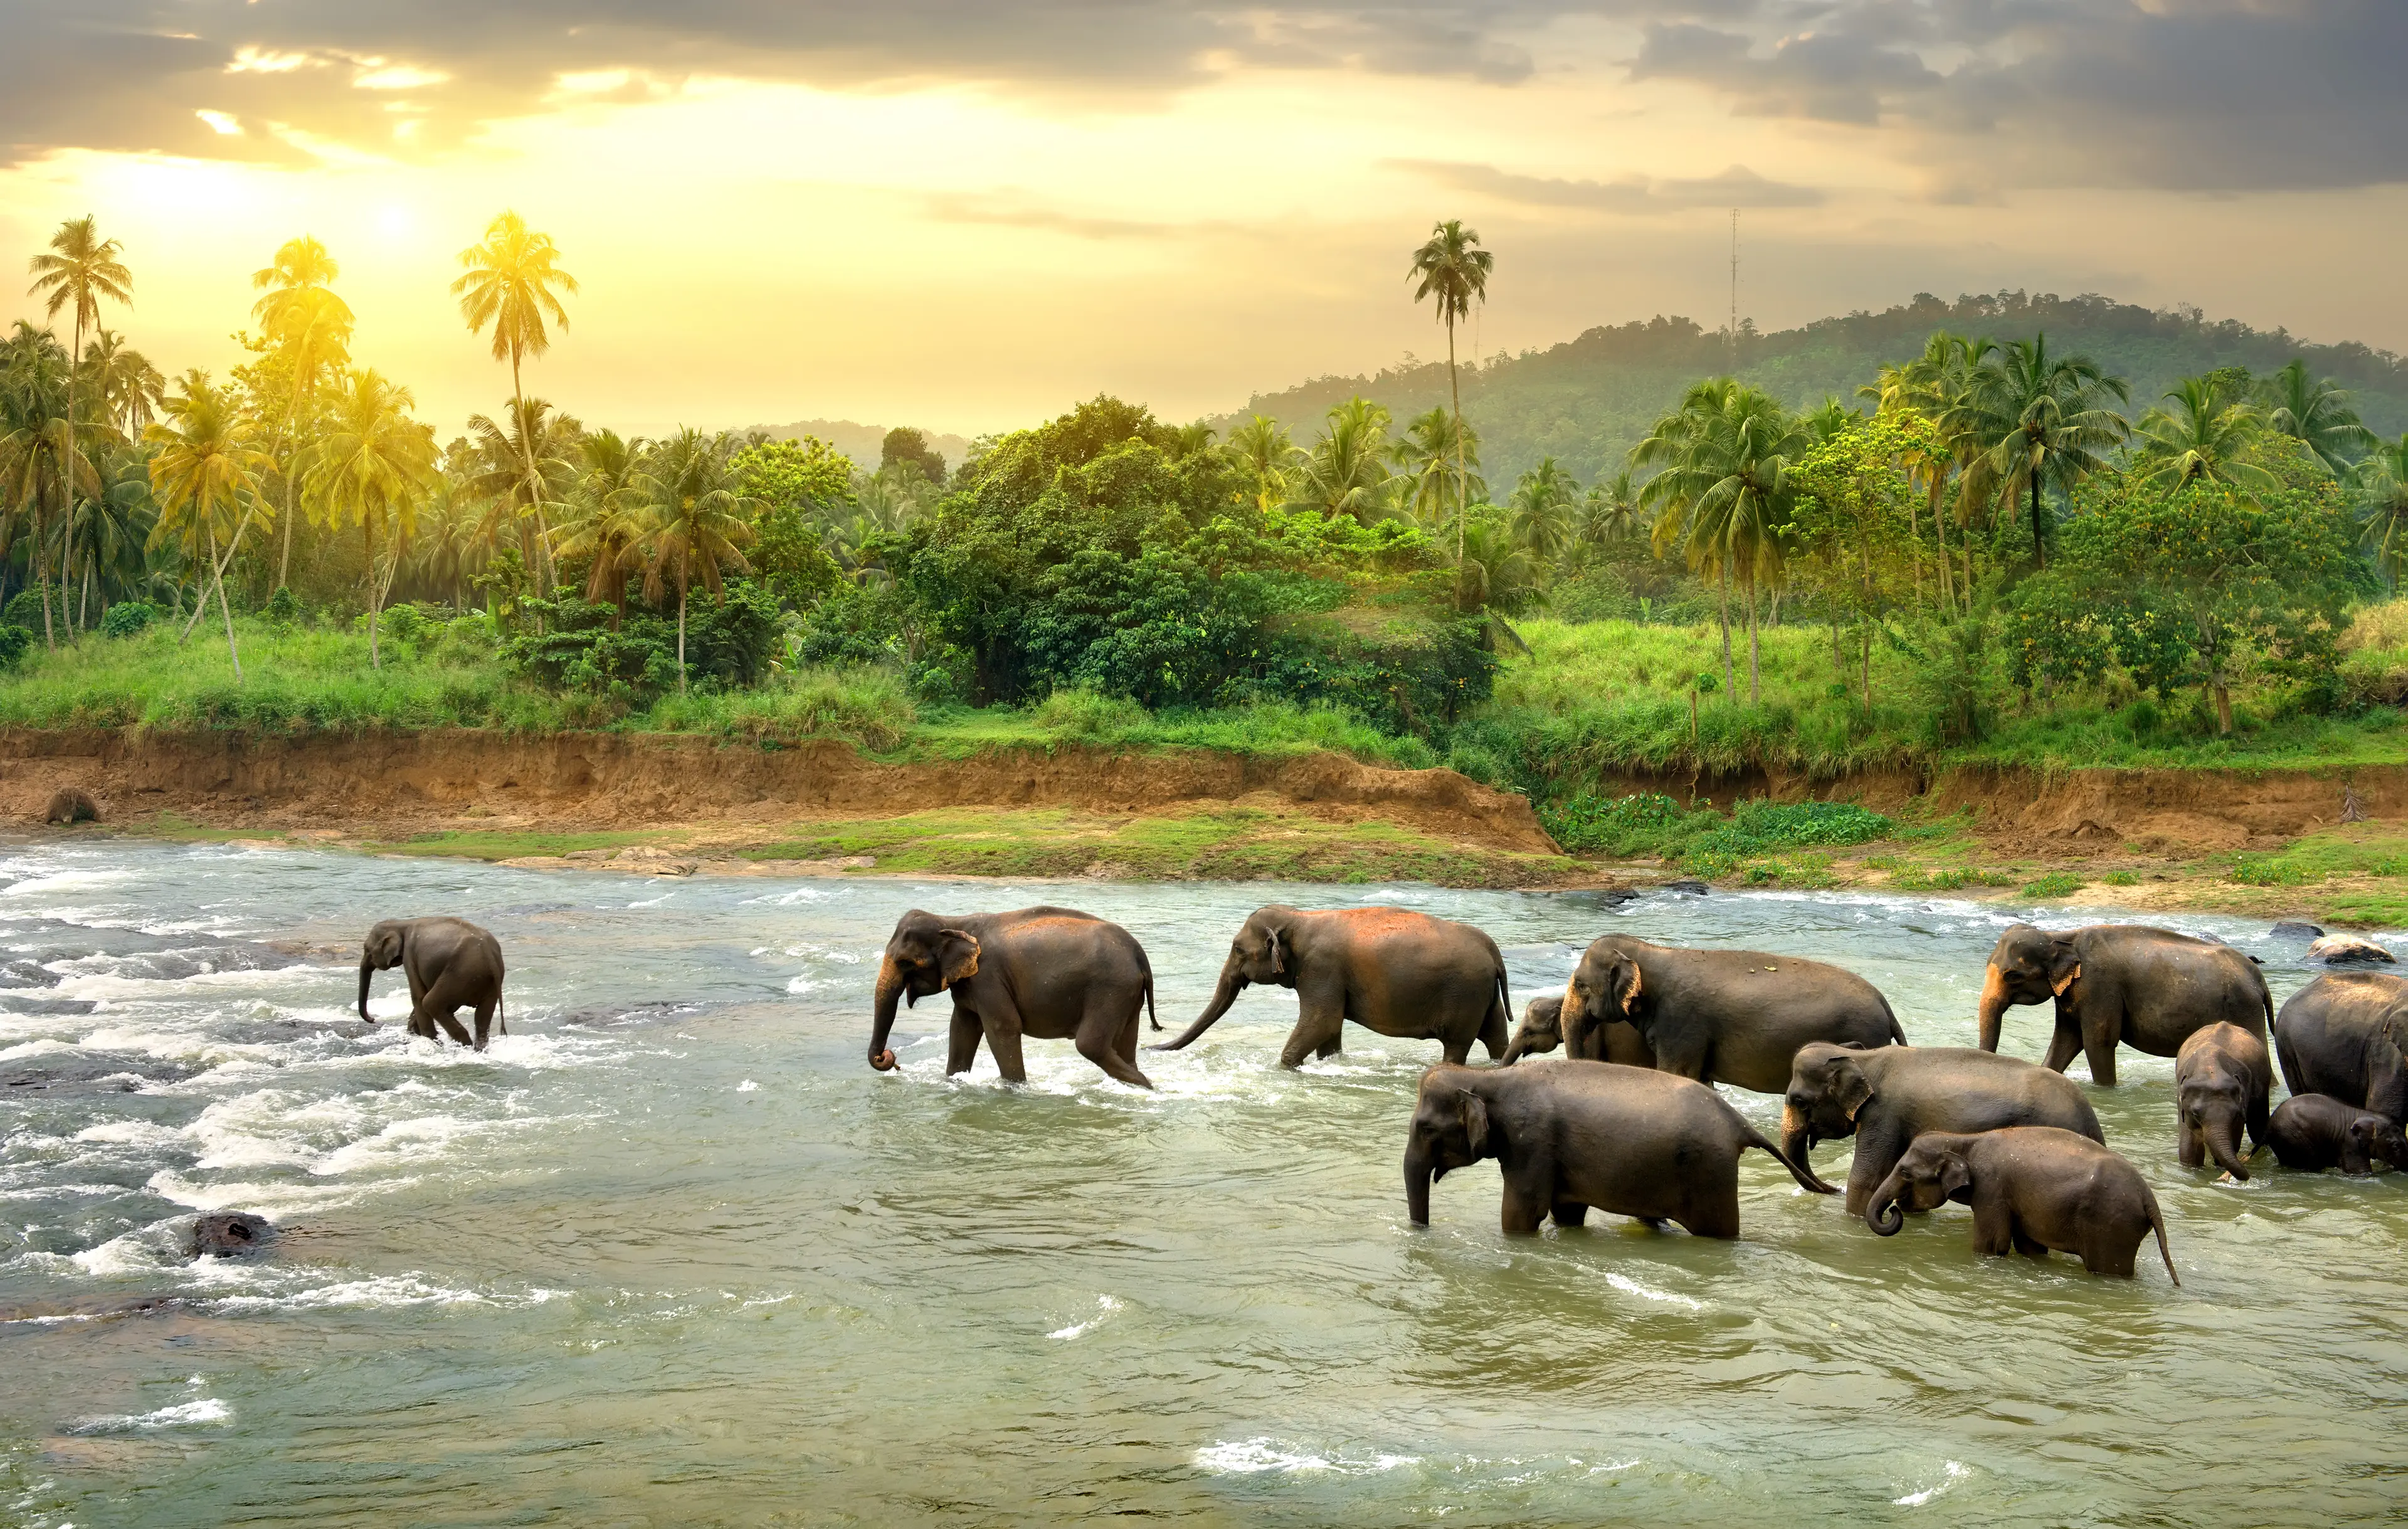 Explore Sri Lanka: A Thrilling 2-day Travel Itinerary